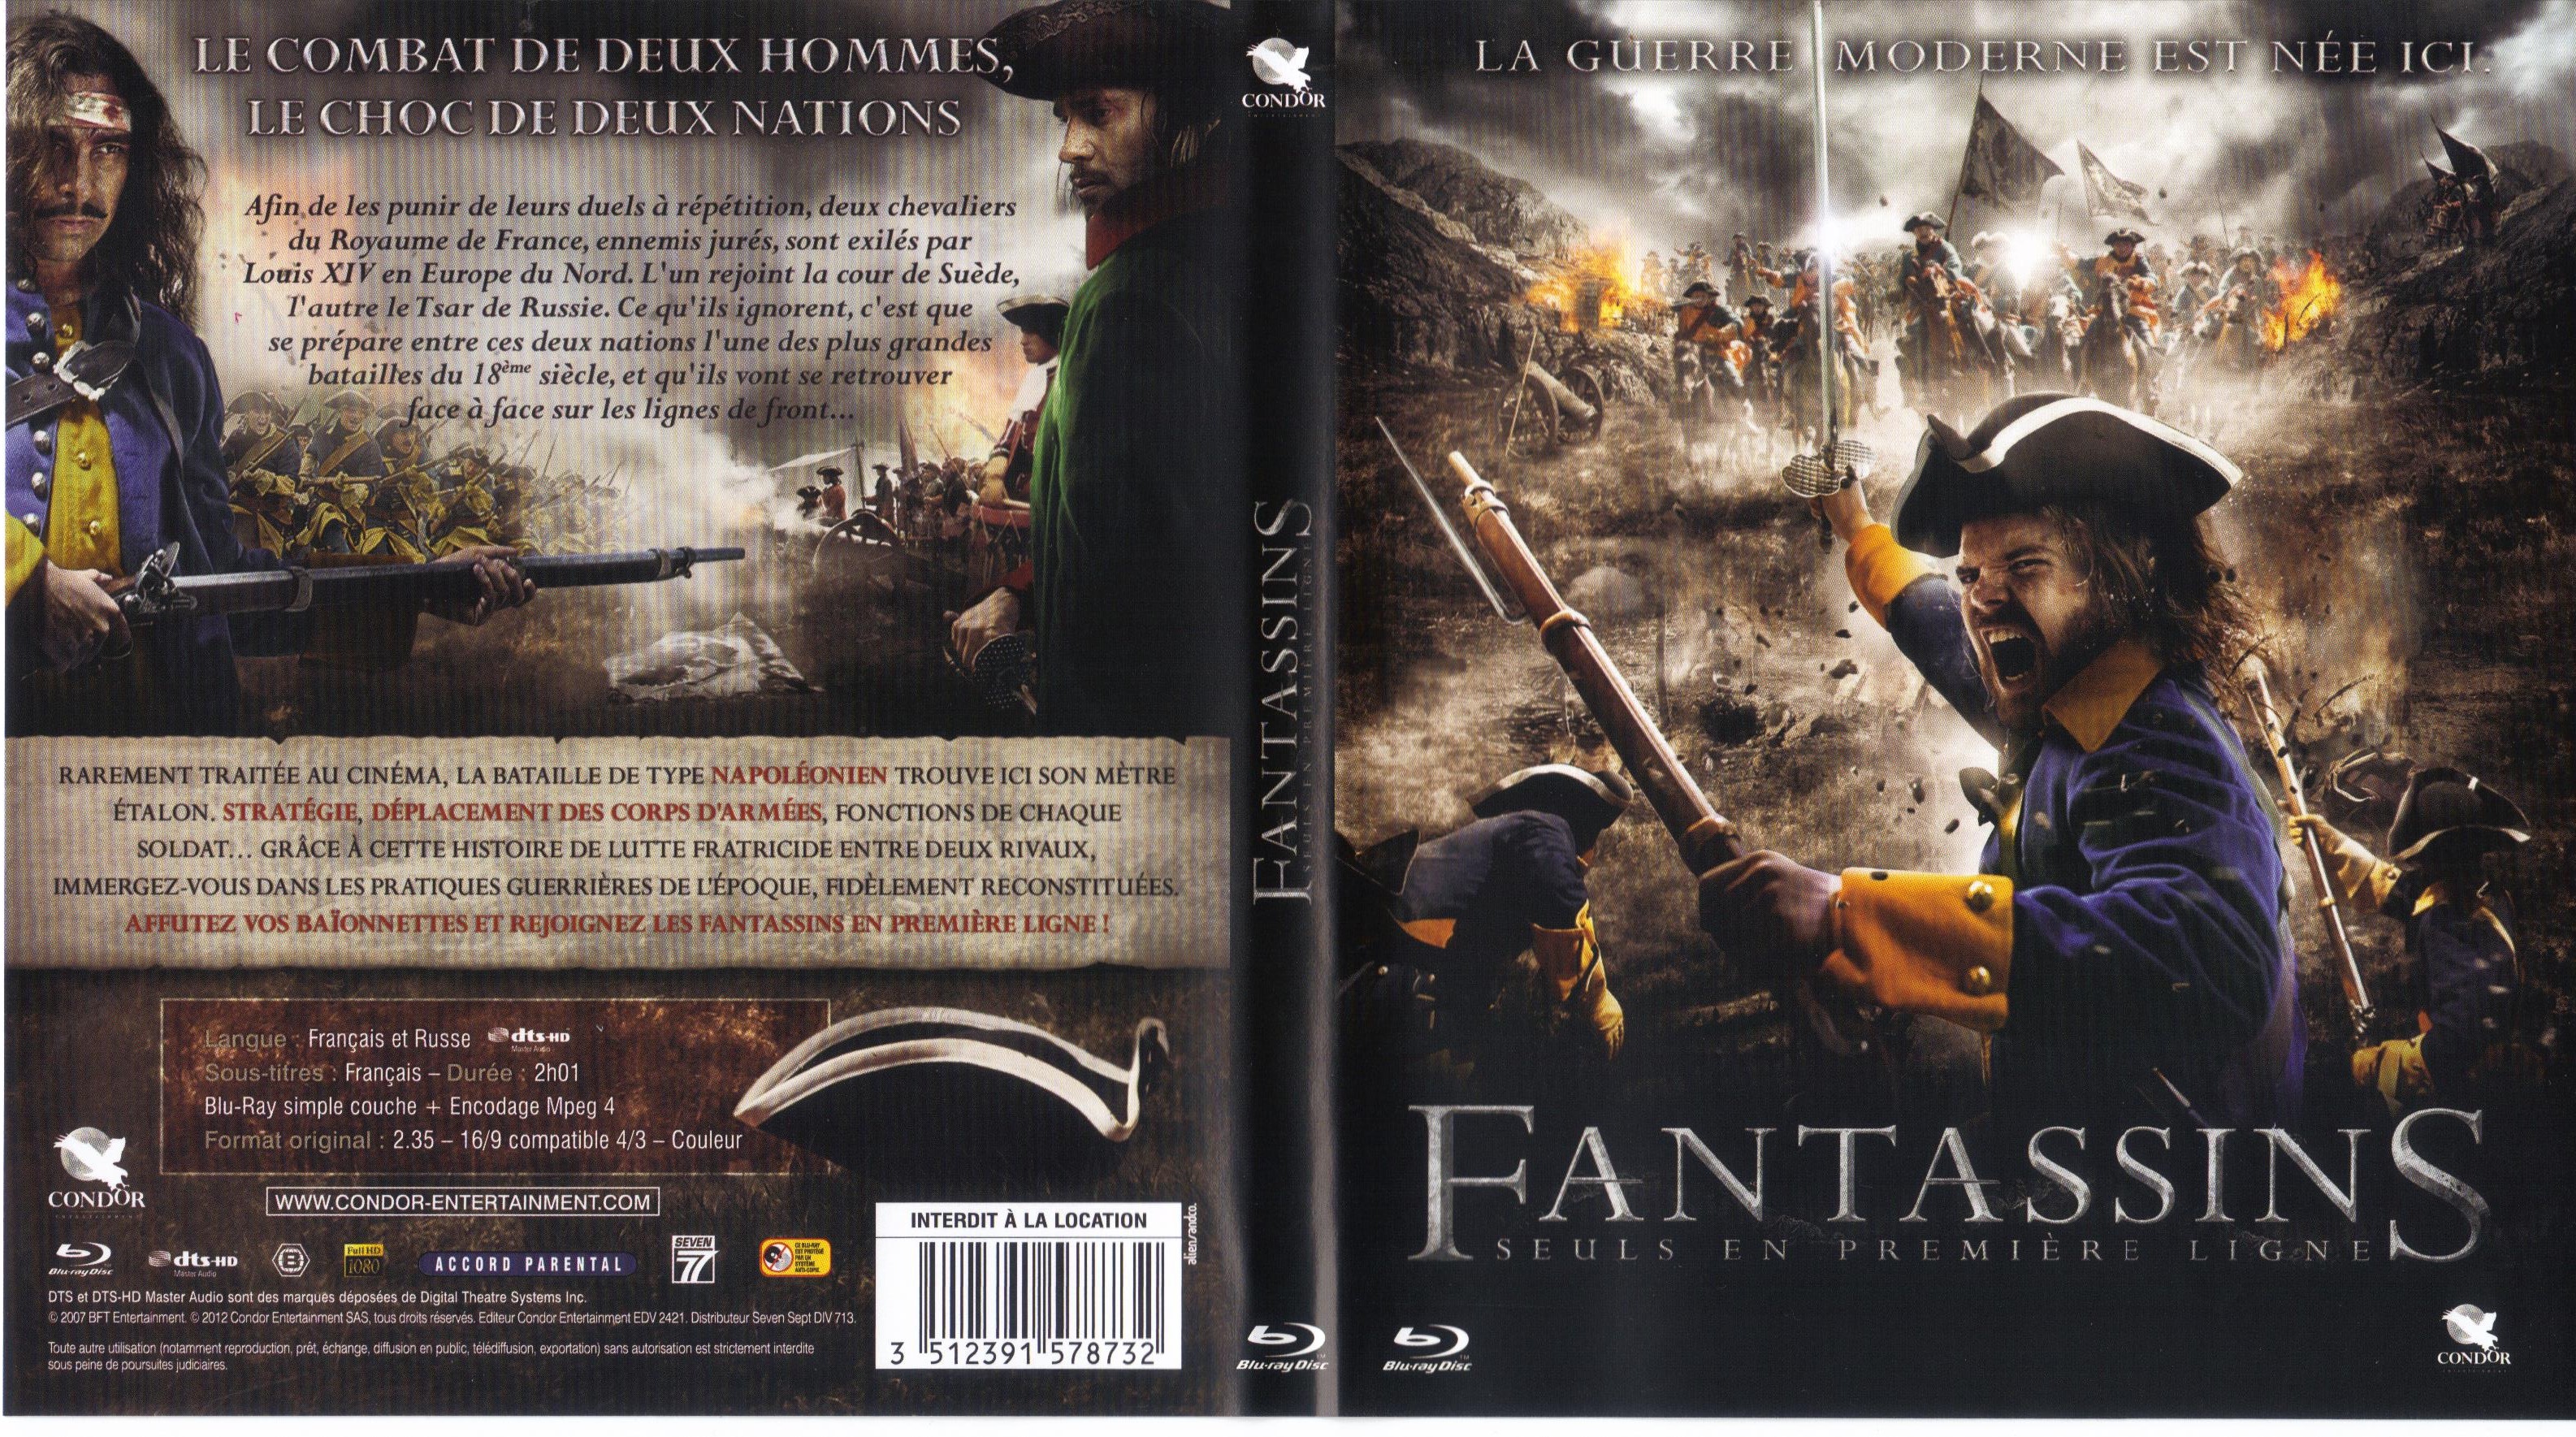 Jaquette DVD Fantassins (BLU-RAY)